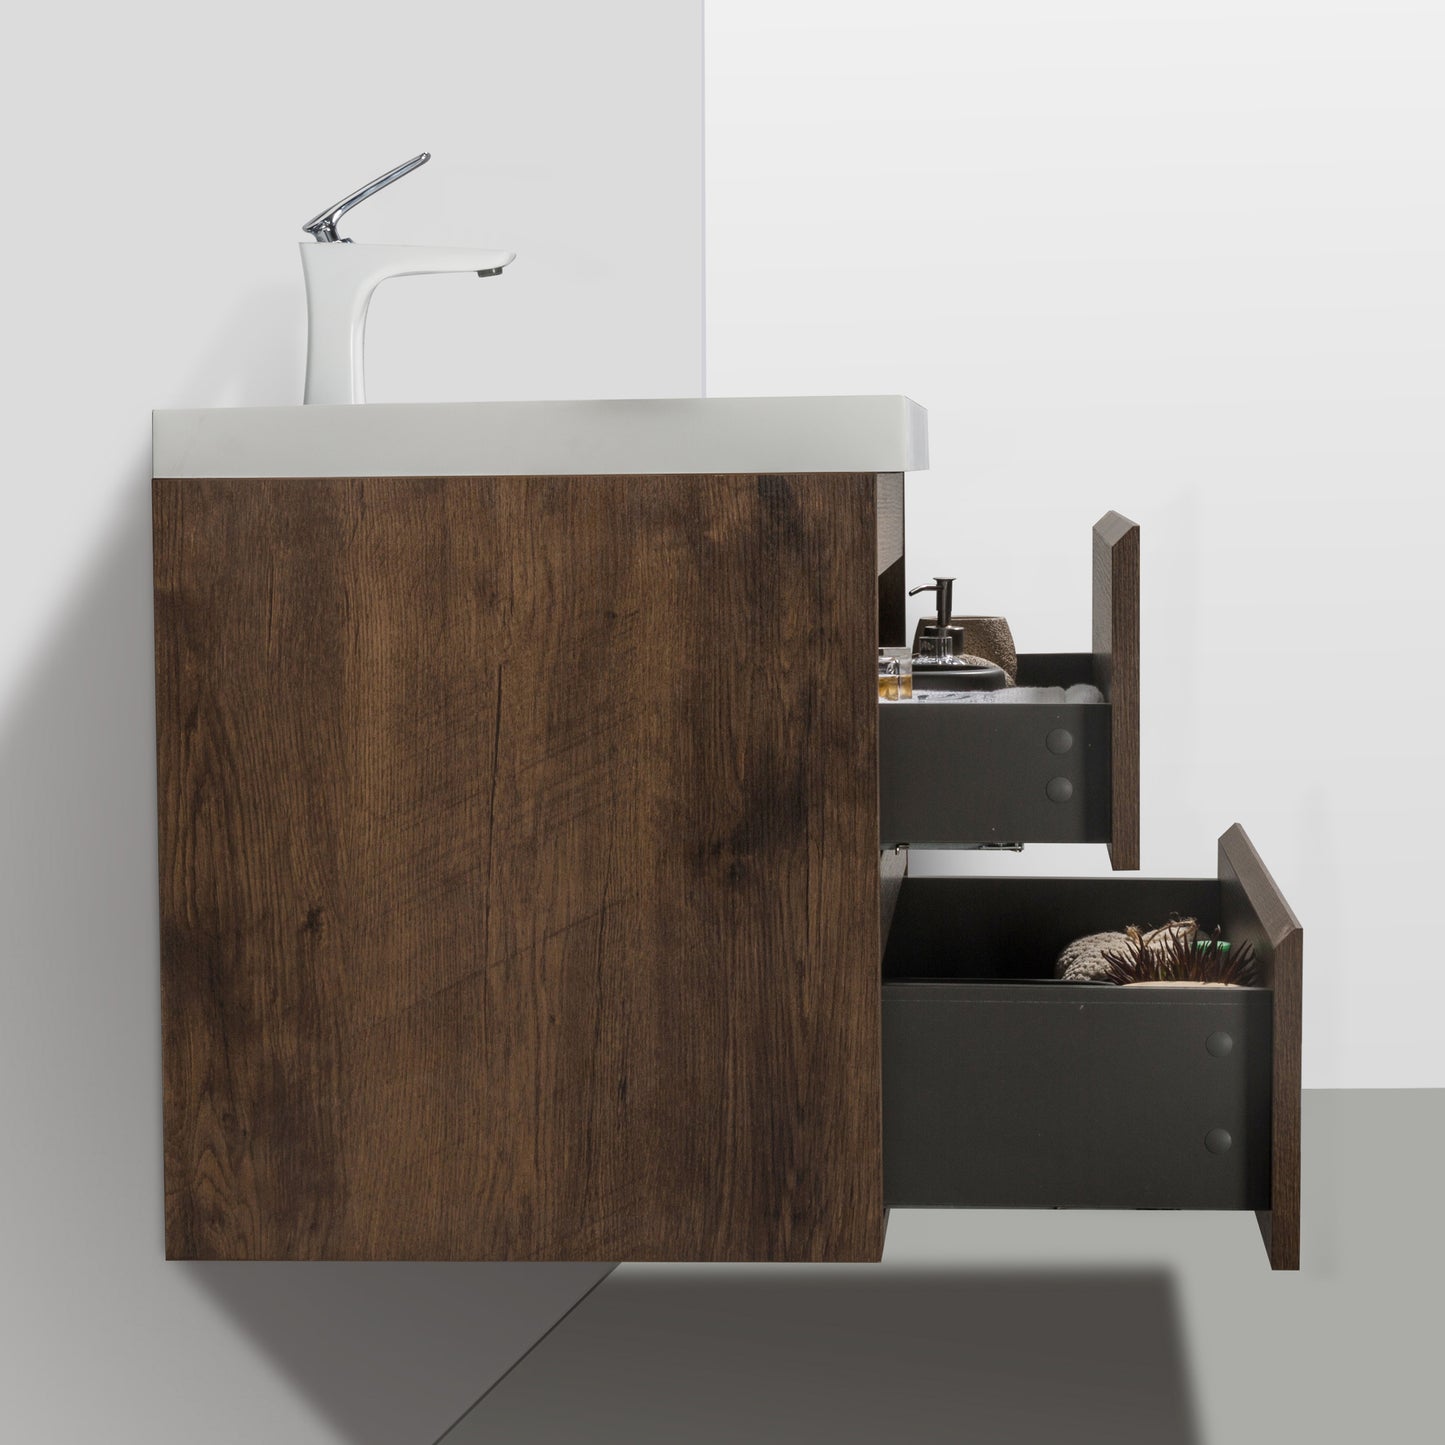 Newport Modern Design Rose Wood Bathroom Furniture Set with Cabinet and Basin